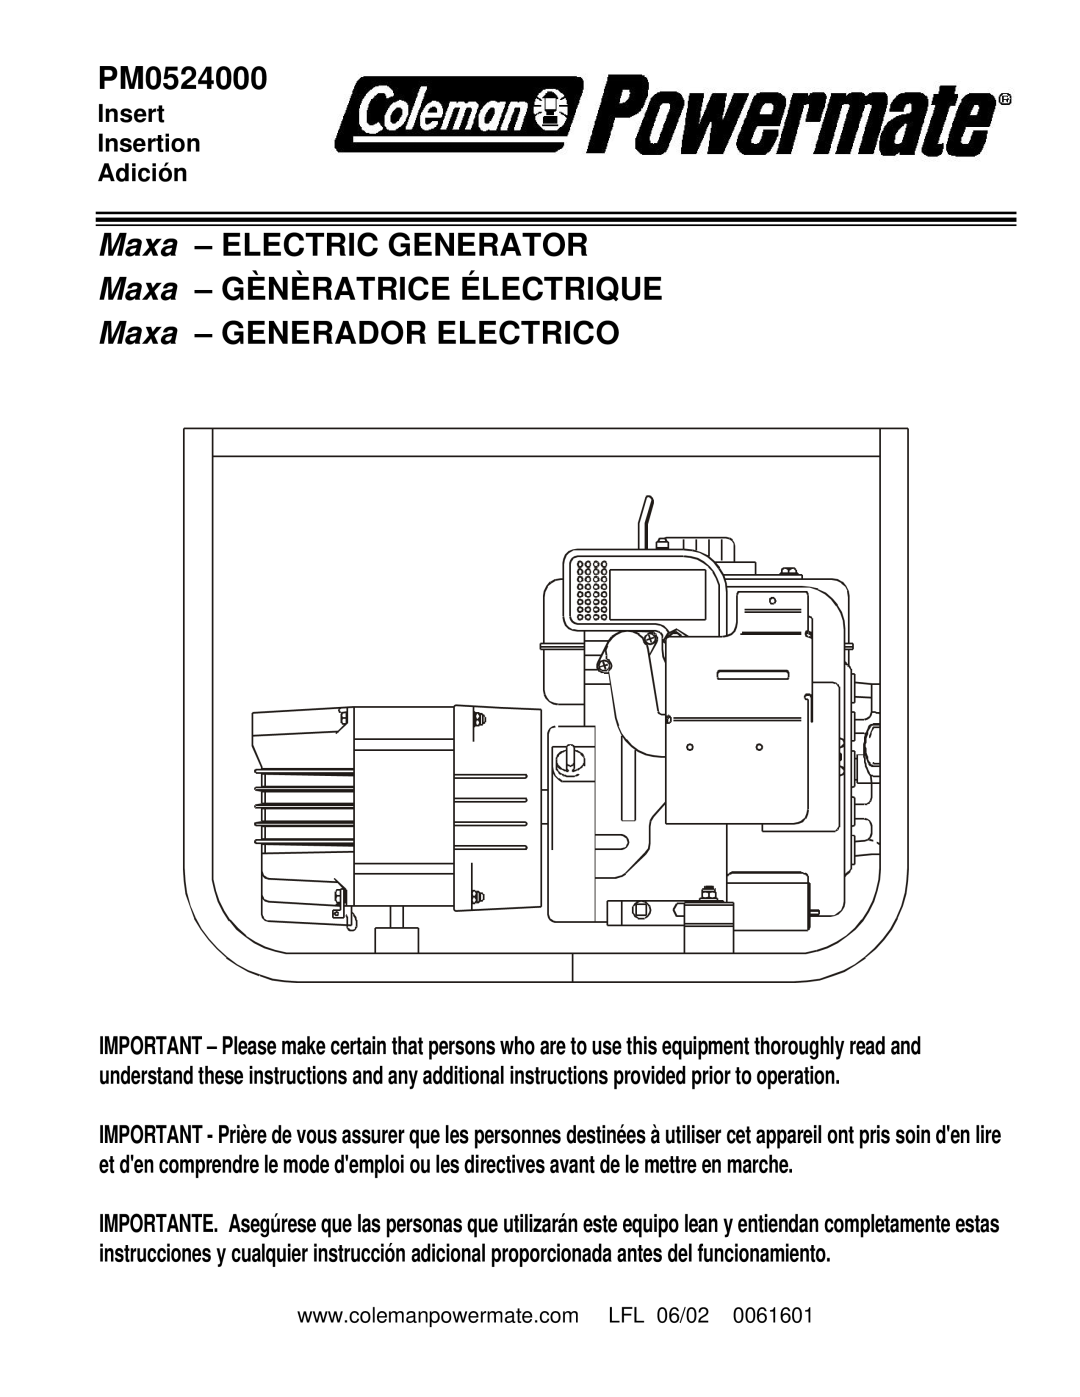 Powermate PM0524000 manual Maxa – ELECTRIC GENERATOR, Maxa – GÈNÈRATRICE ÉLECTRIQUE, Maxa – GENERADOR ELECTRICO 